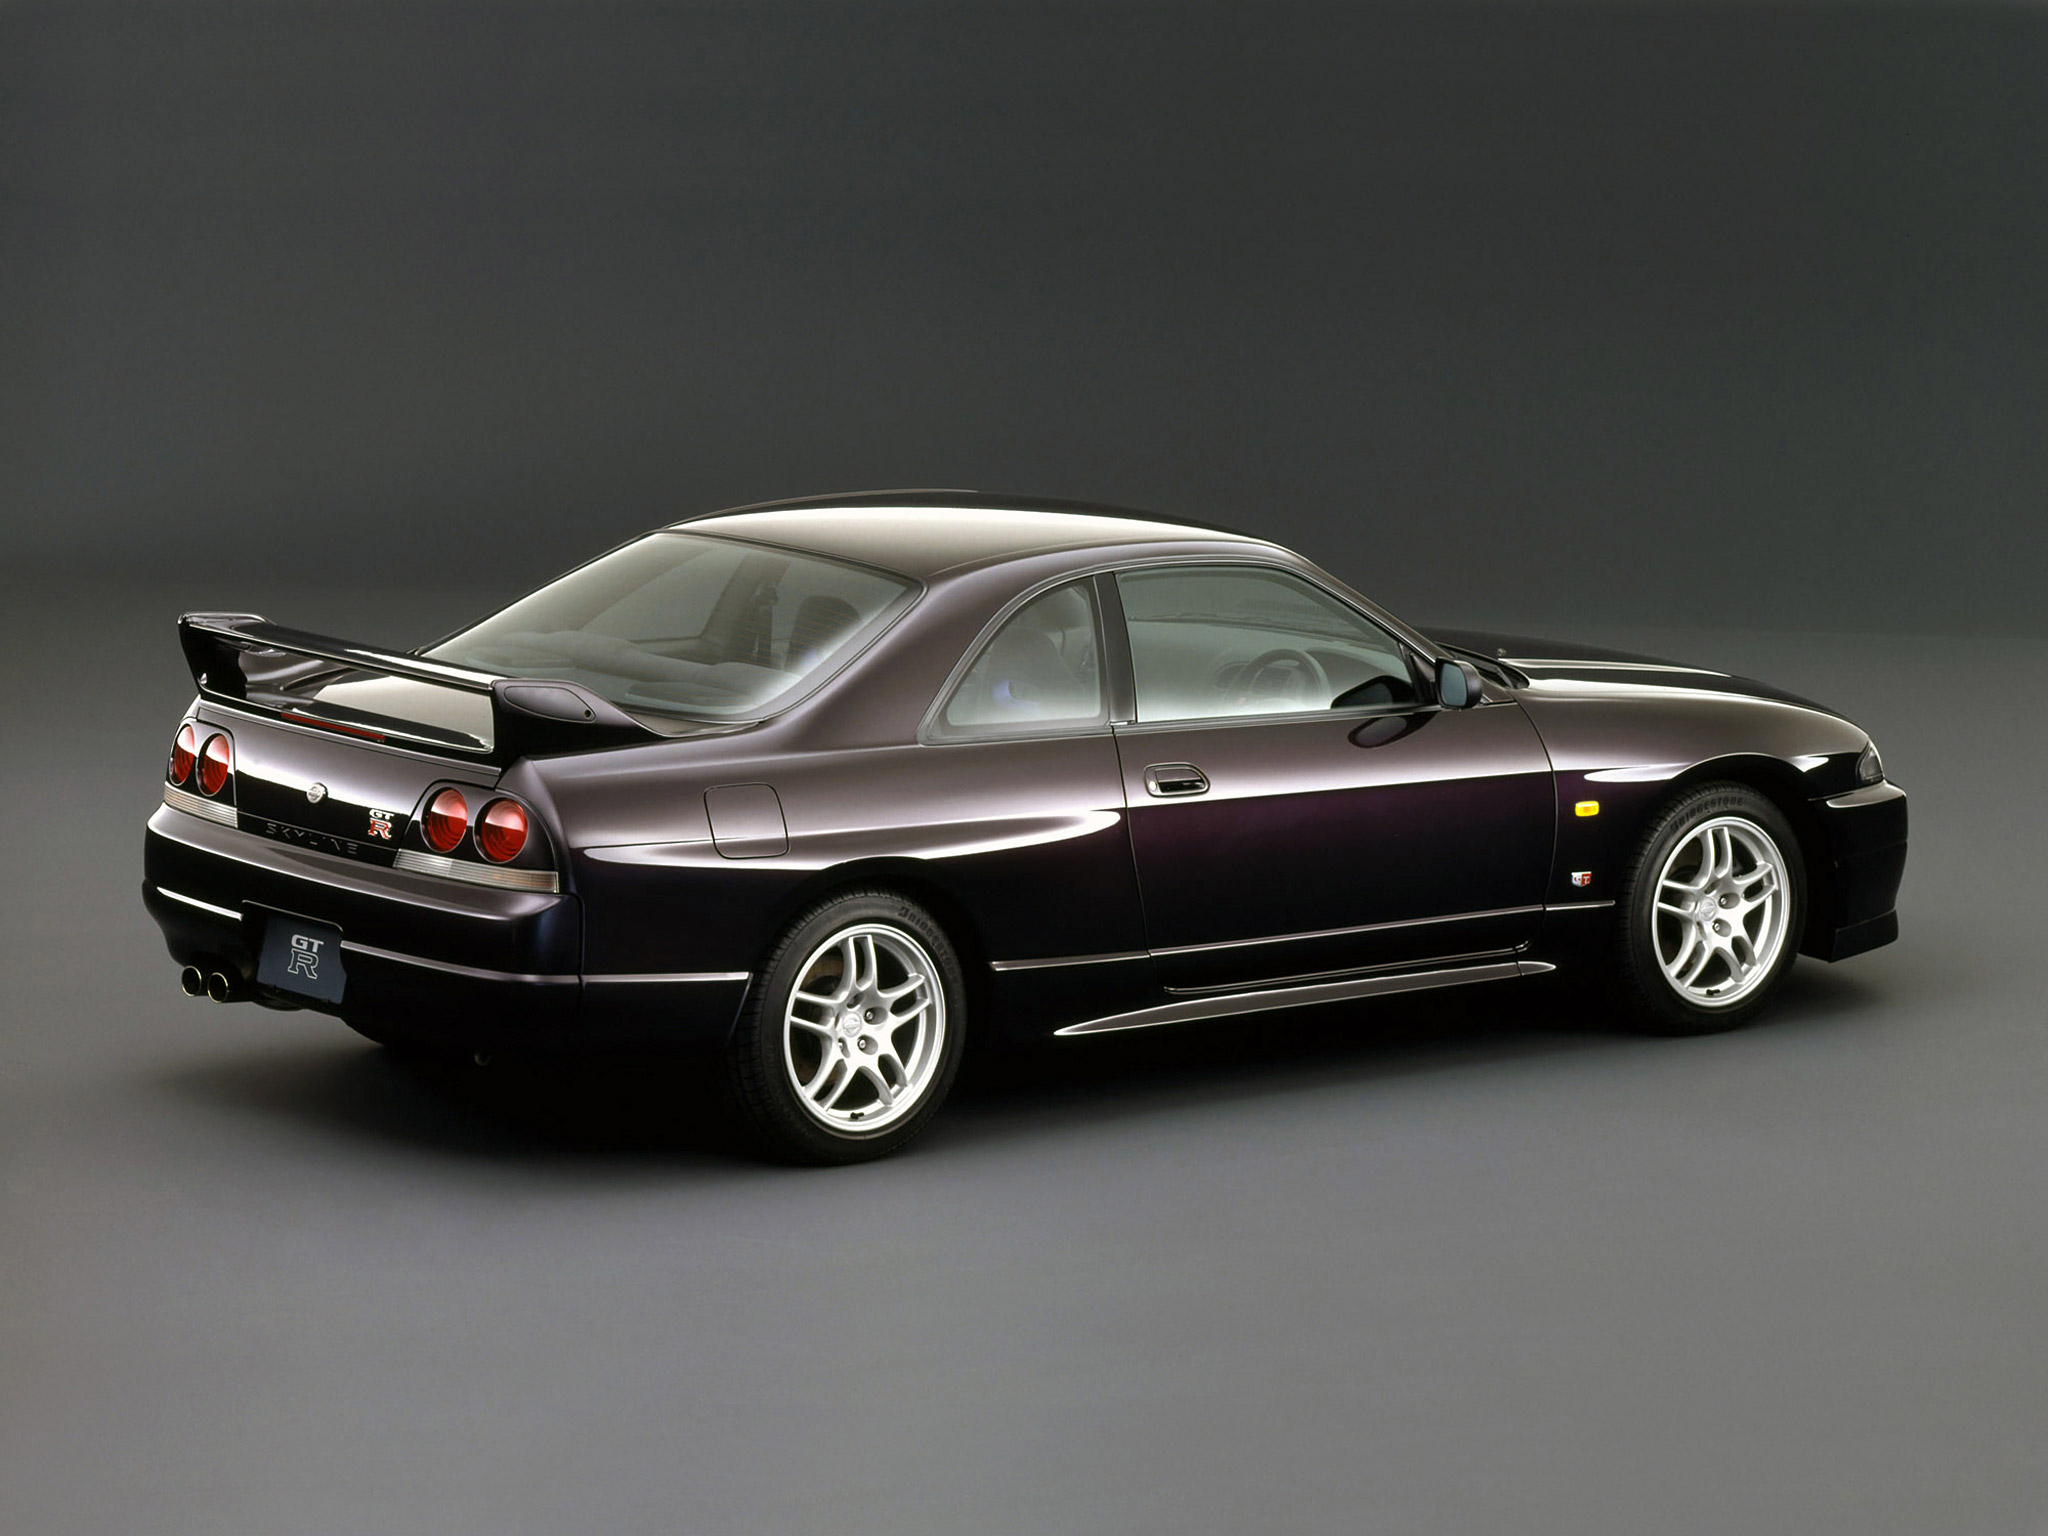  1995 Nissan Skyline GT-R Wallpaper.